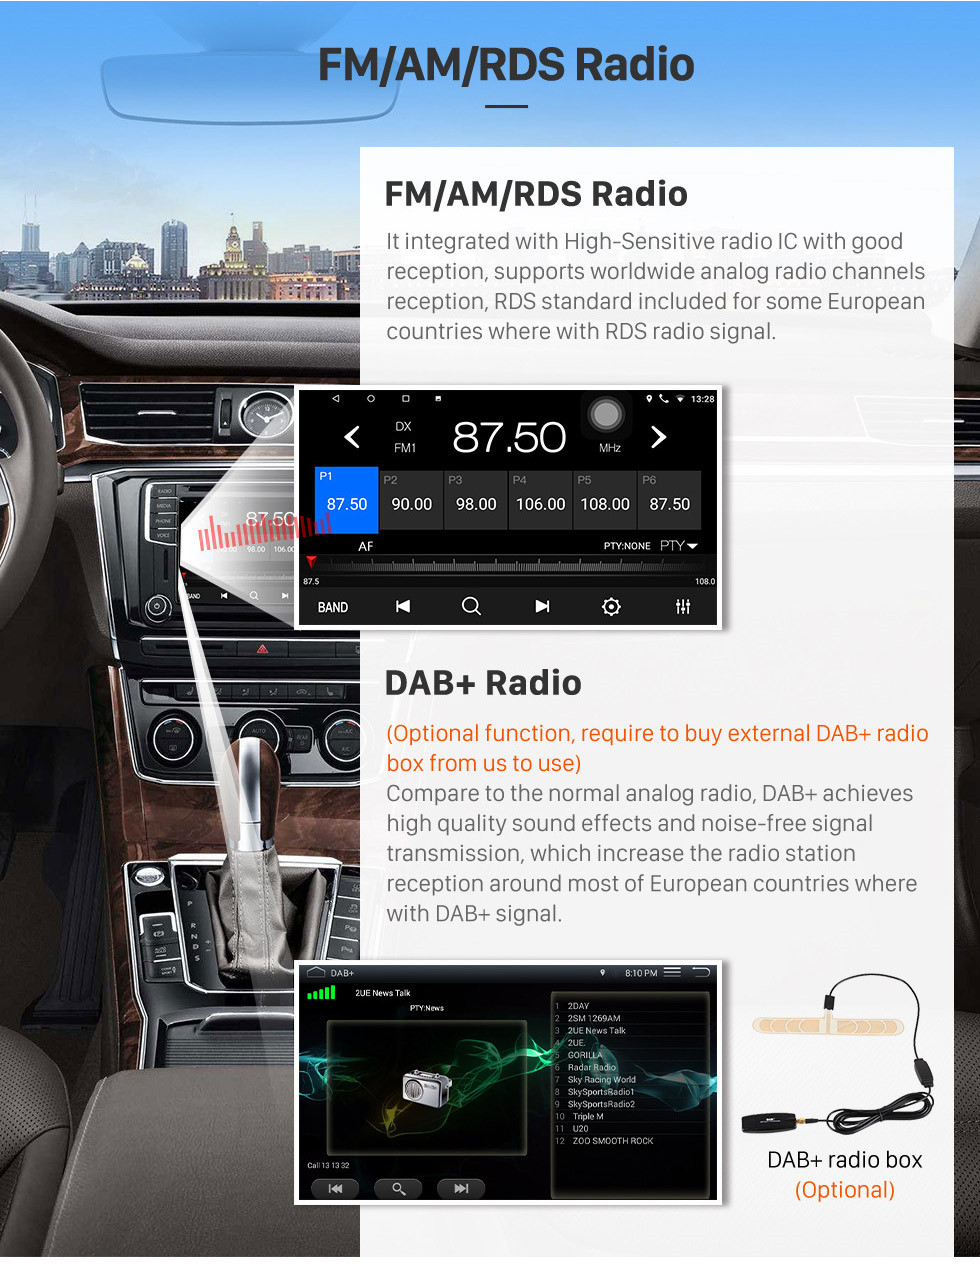 Seicane OEM 9 pulgadas Android 10.0 Radio para 2001-2008 Peugeot 307 Bluetooth WIFI HD Pantalla táctil con soporte de navegación GPS Carplay DVR OBD cámara de visión trasera